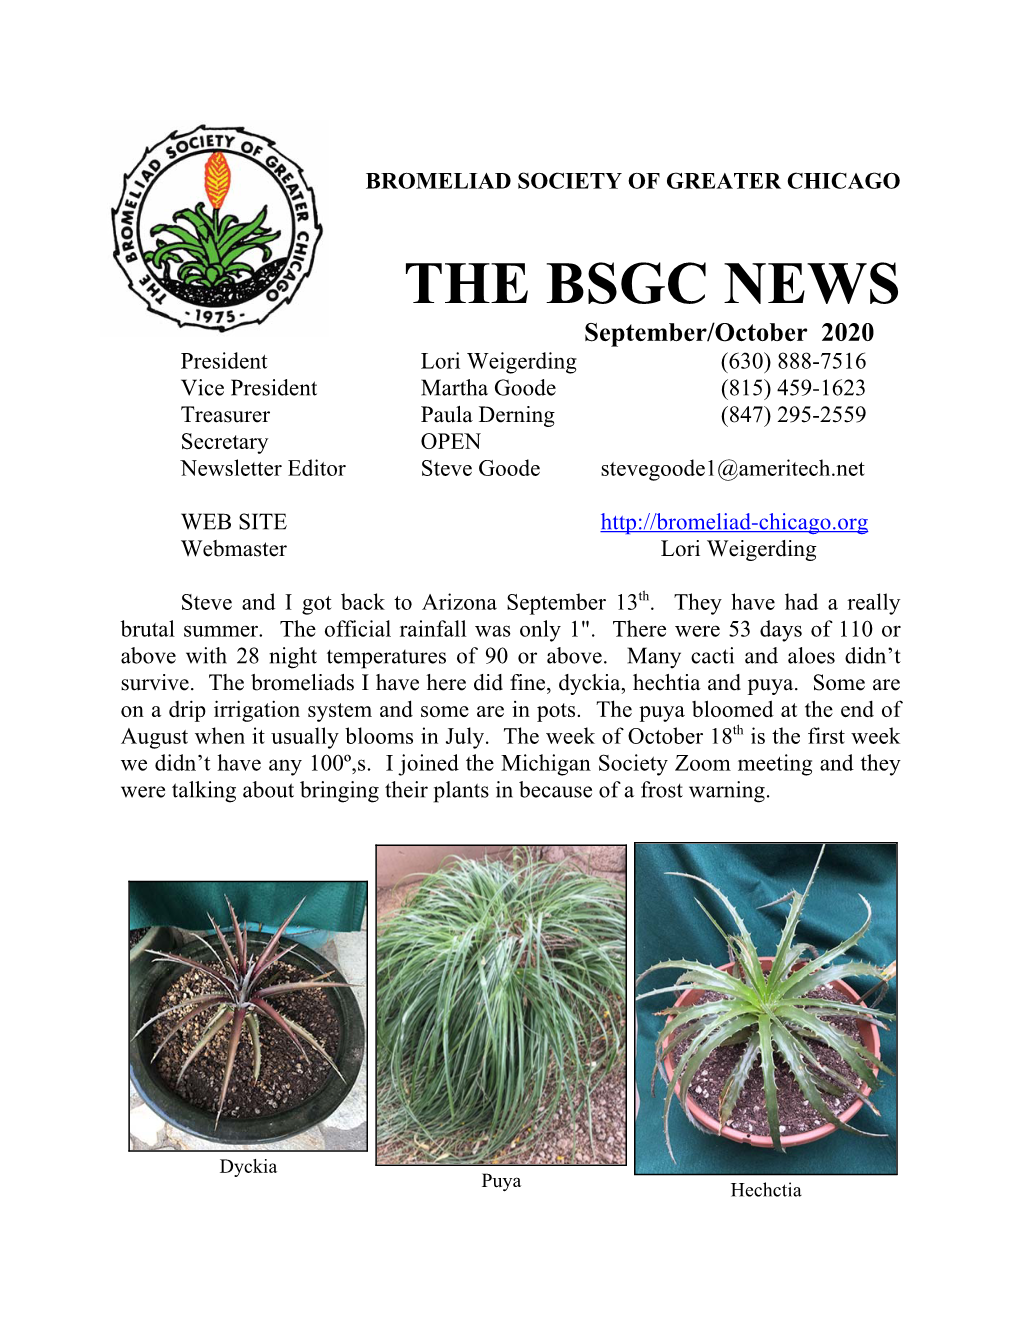 The Bsgc News